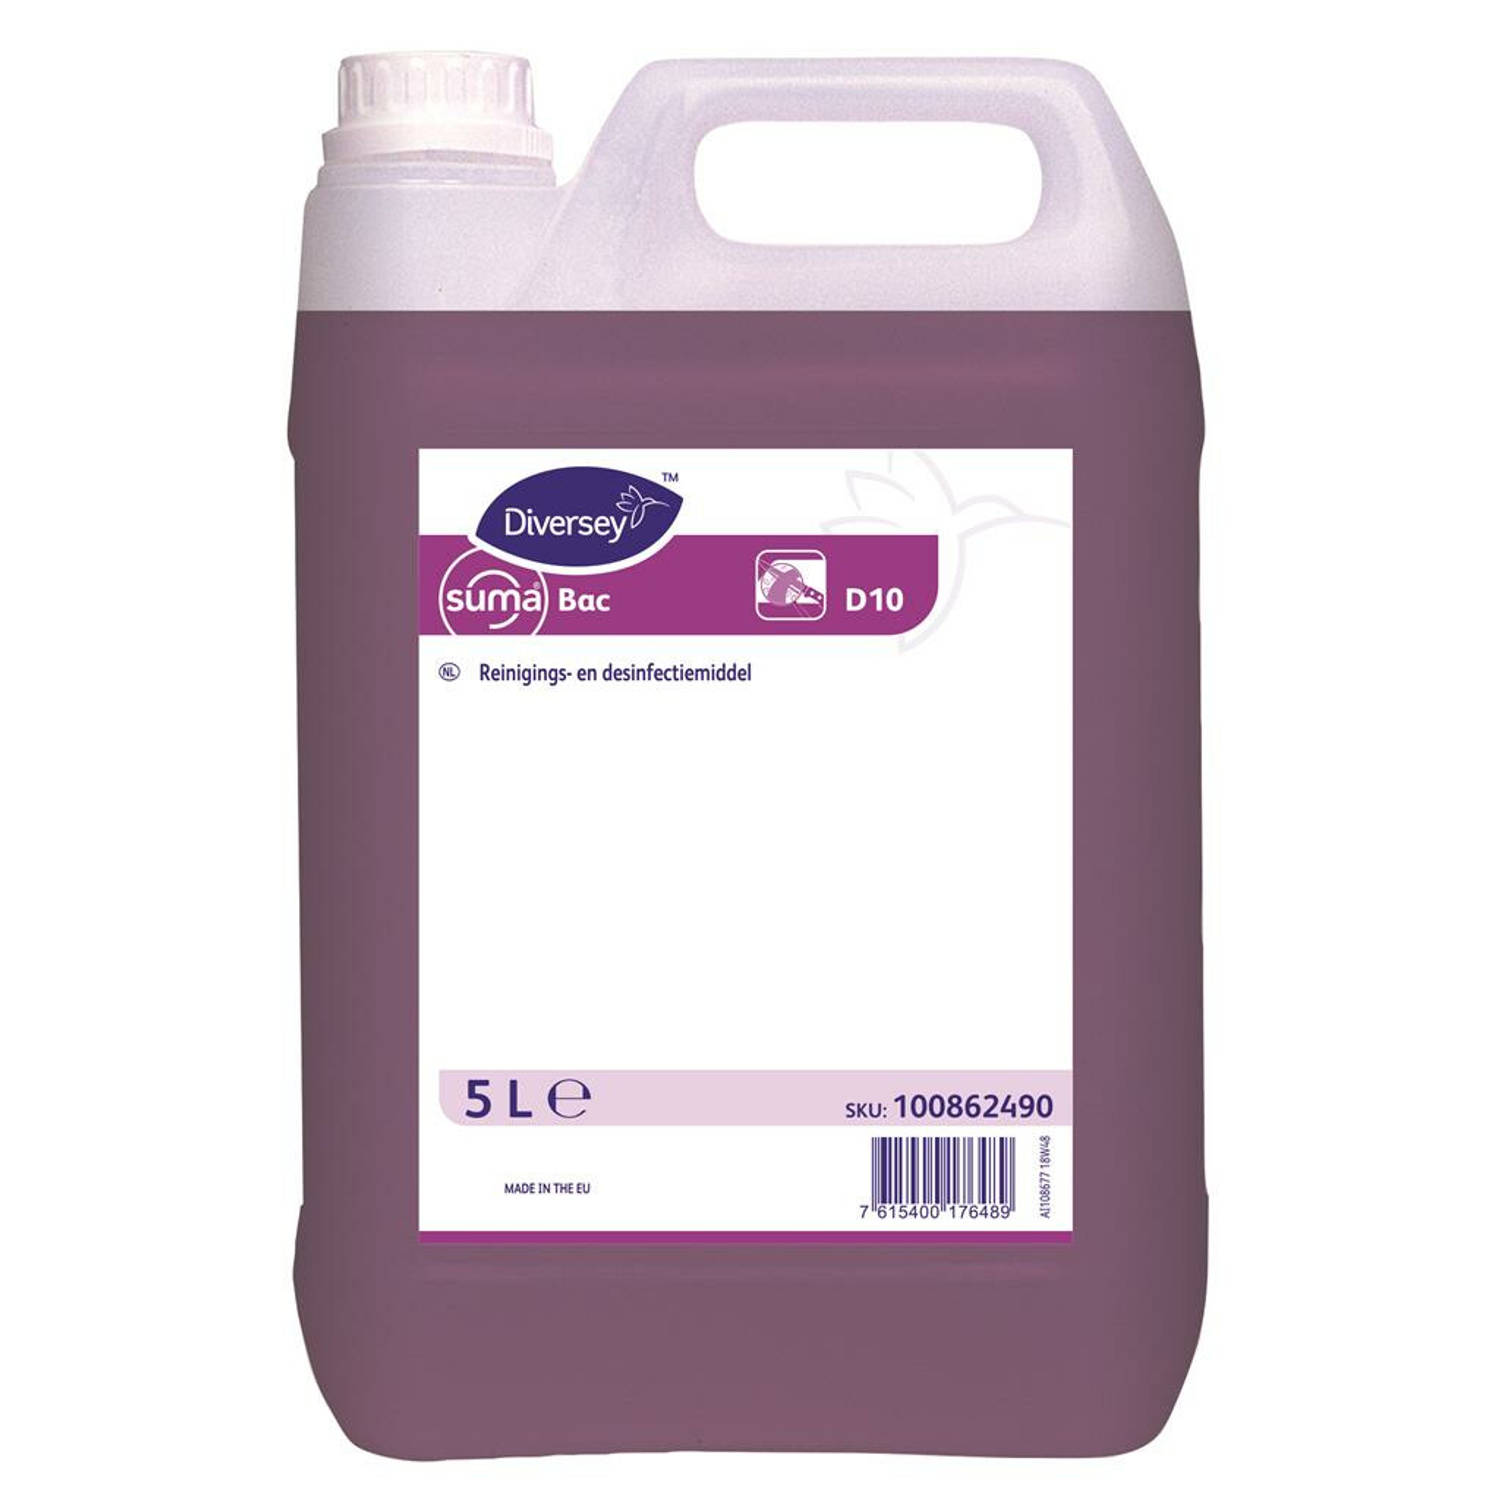 Diversey Suma Bac D10 Reiniging en desinfectie 5 liter